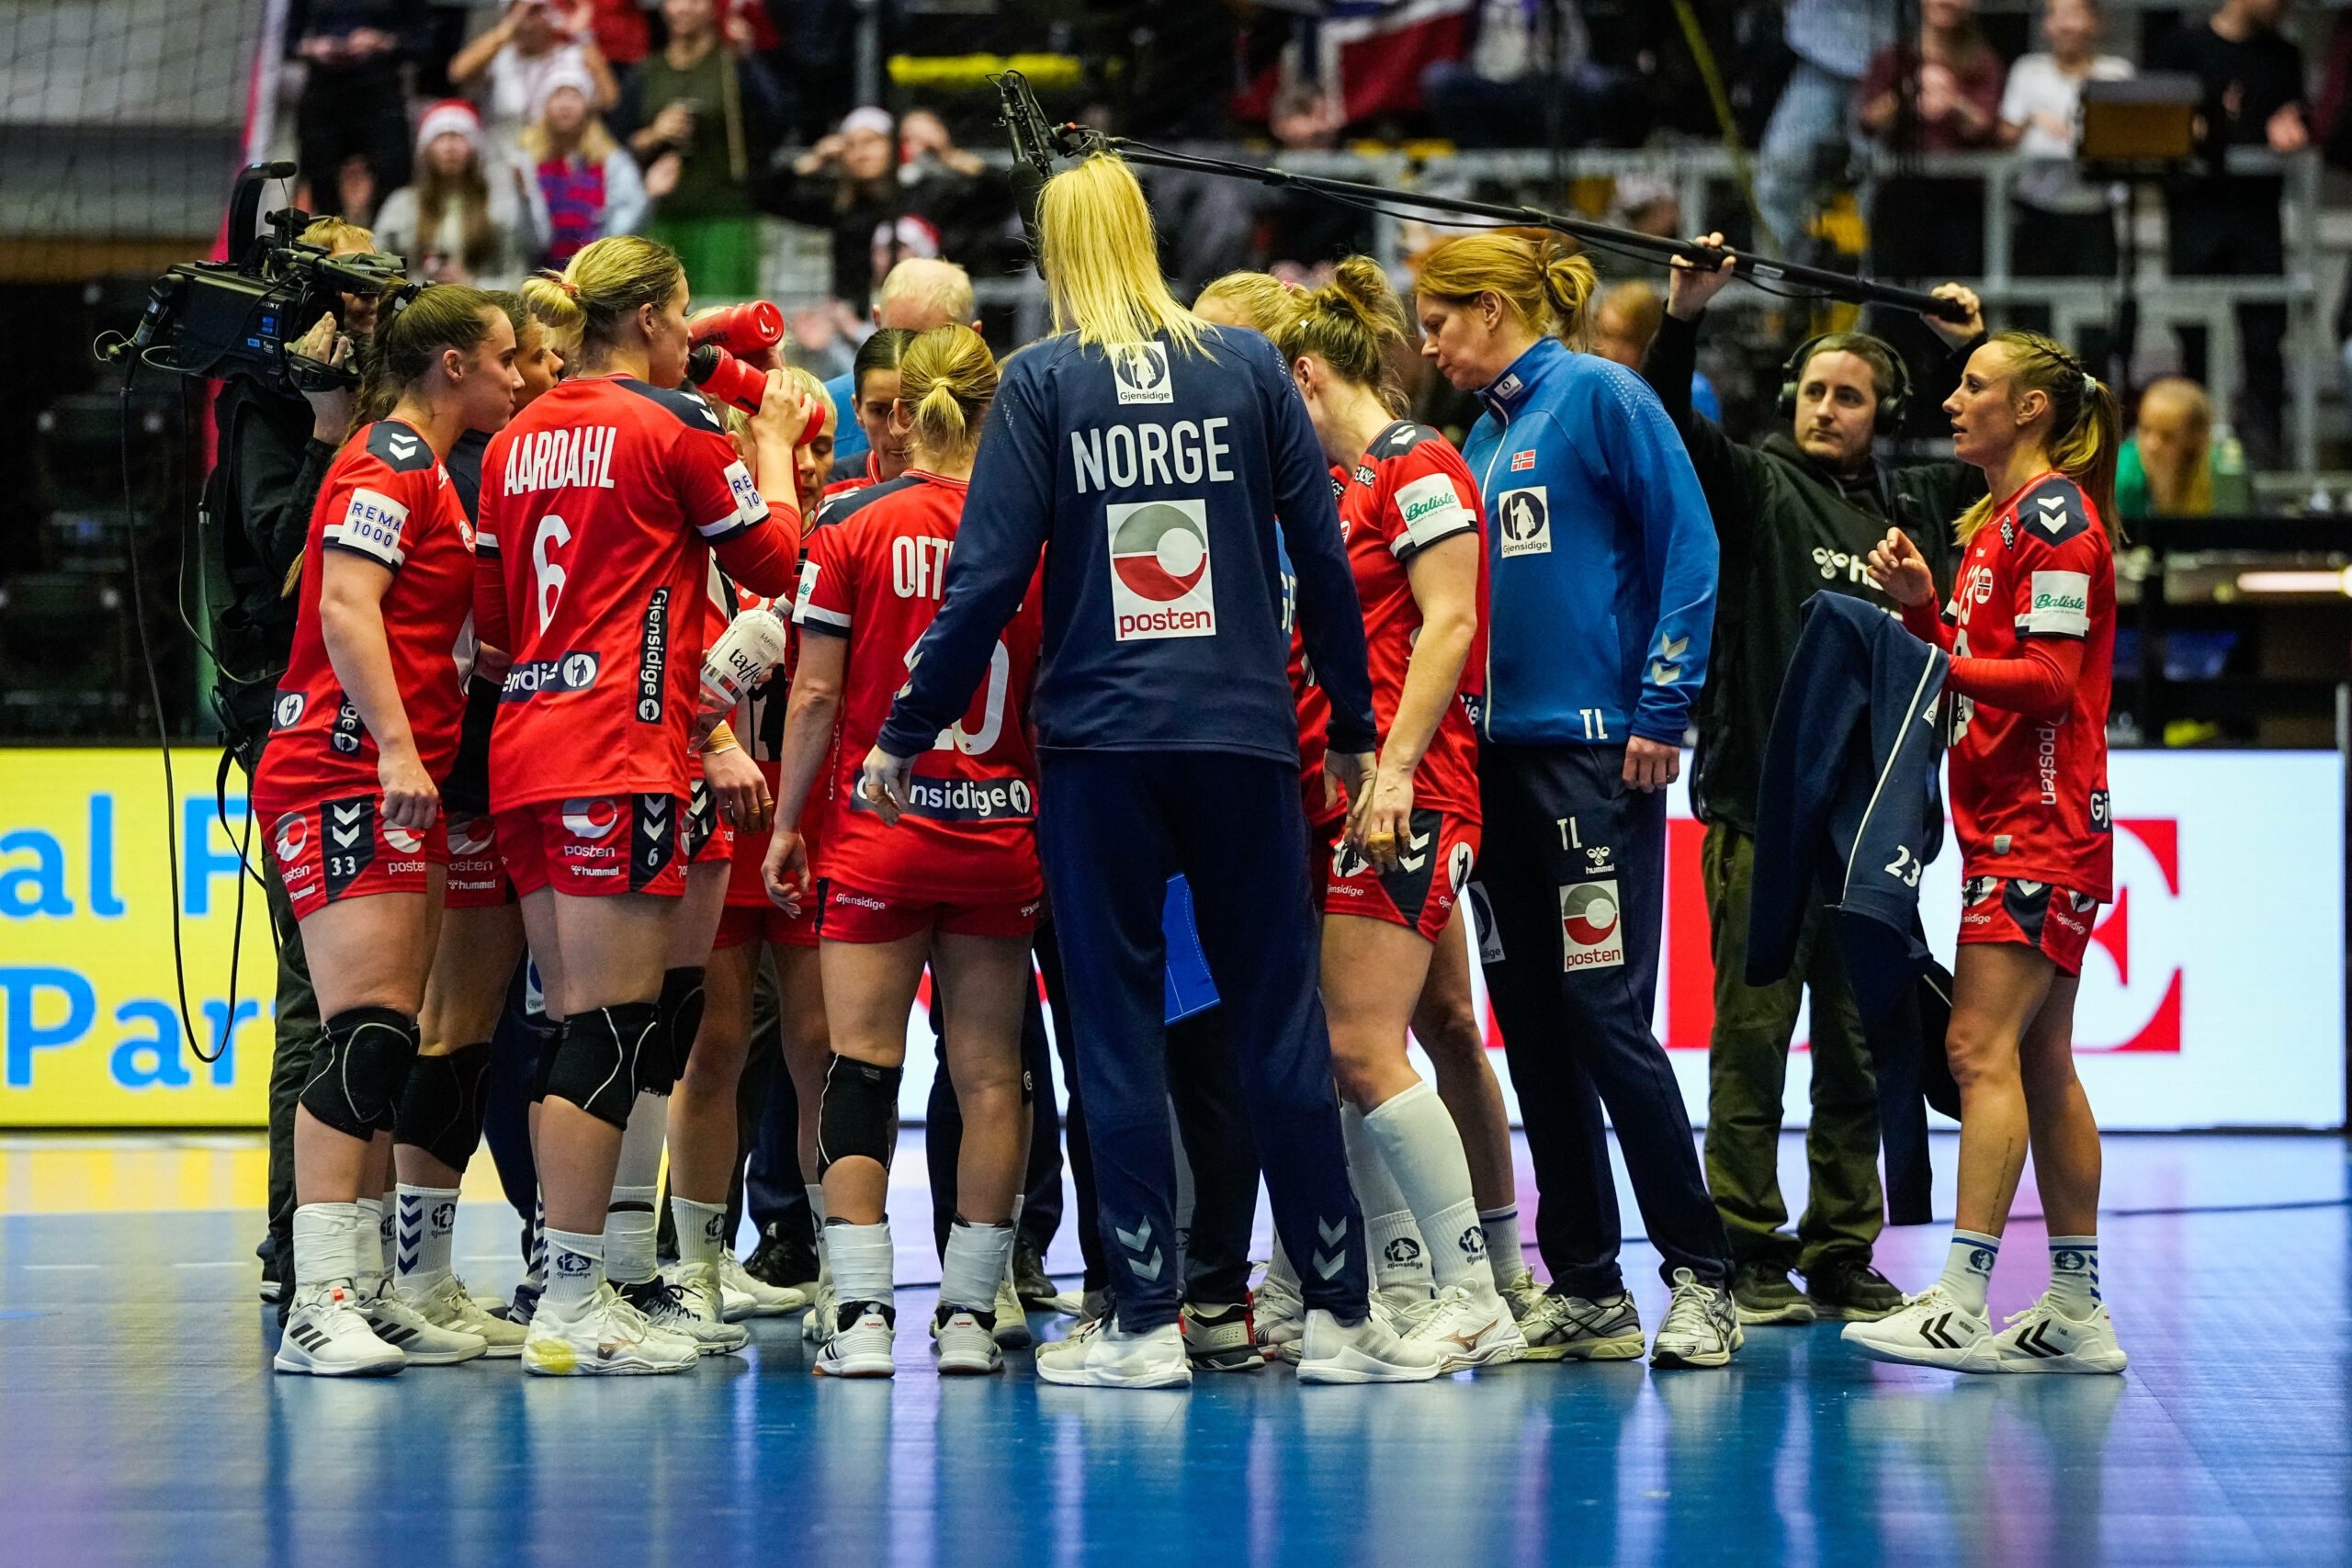 Die Handballerinnen des Norwegischen Nationalteams